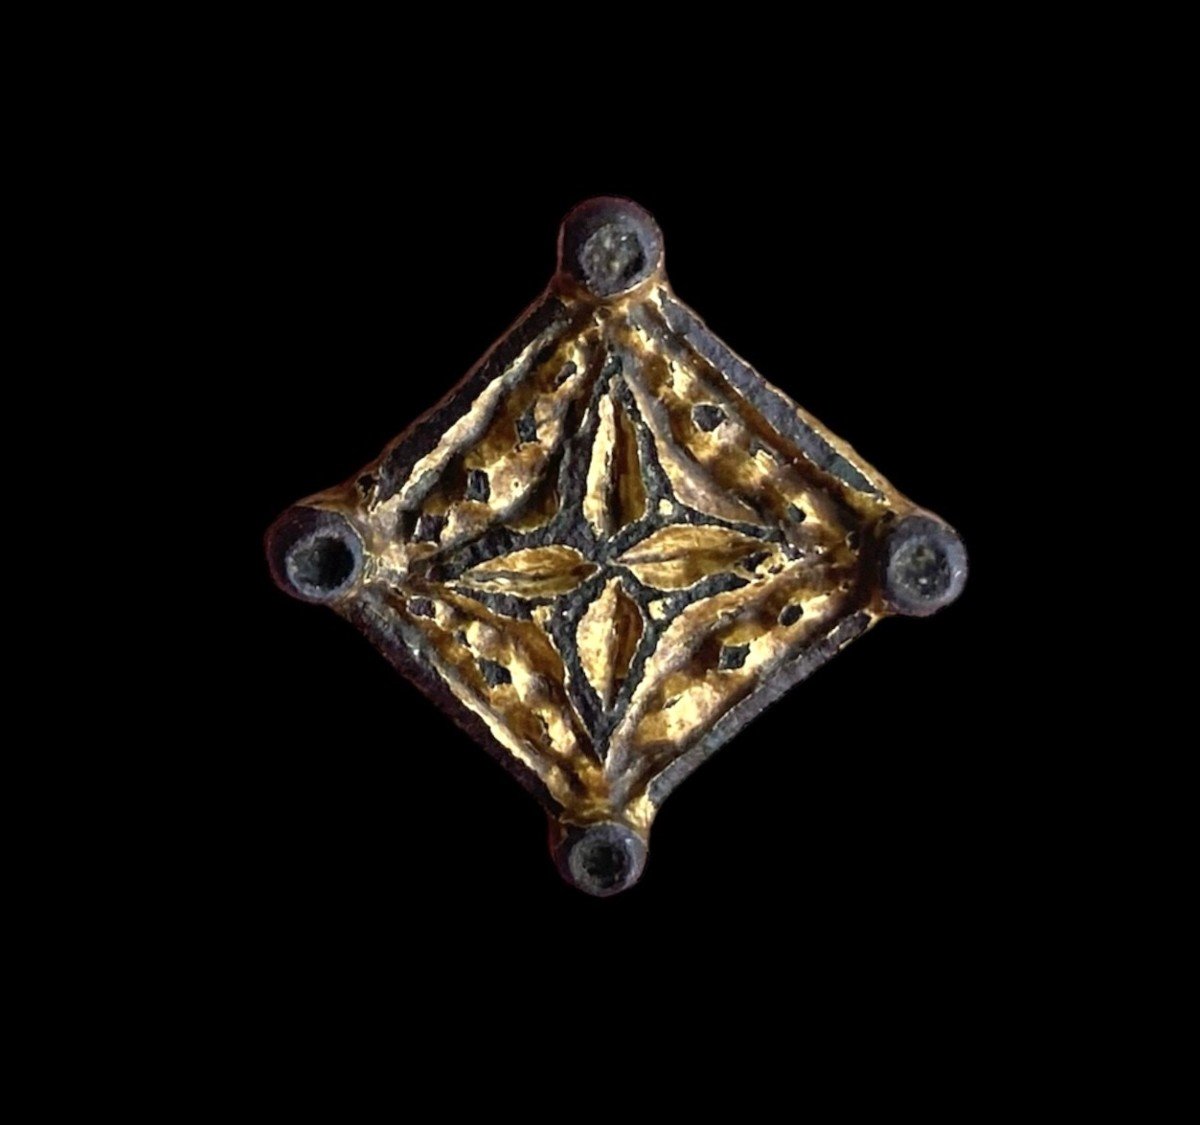 A Diamond Shaped Chipcarved And Gilded Carolingian Fibula-9th Century Ad